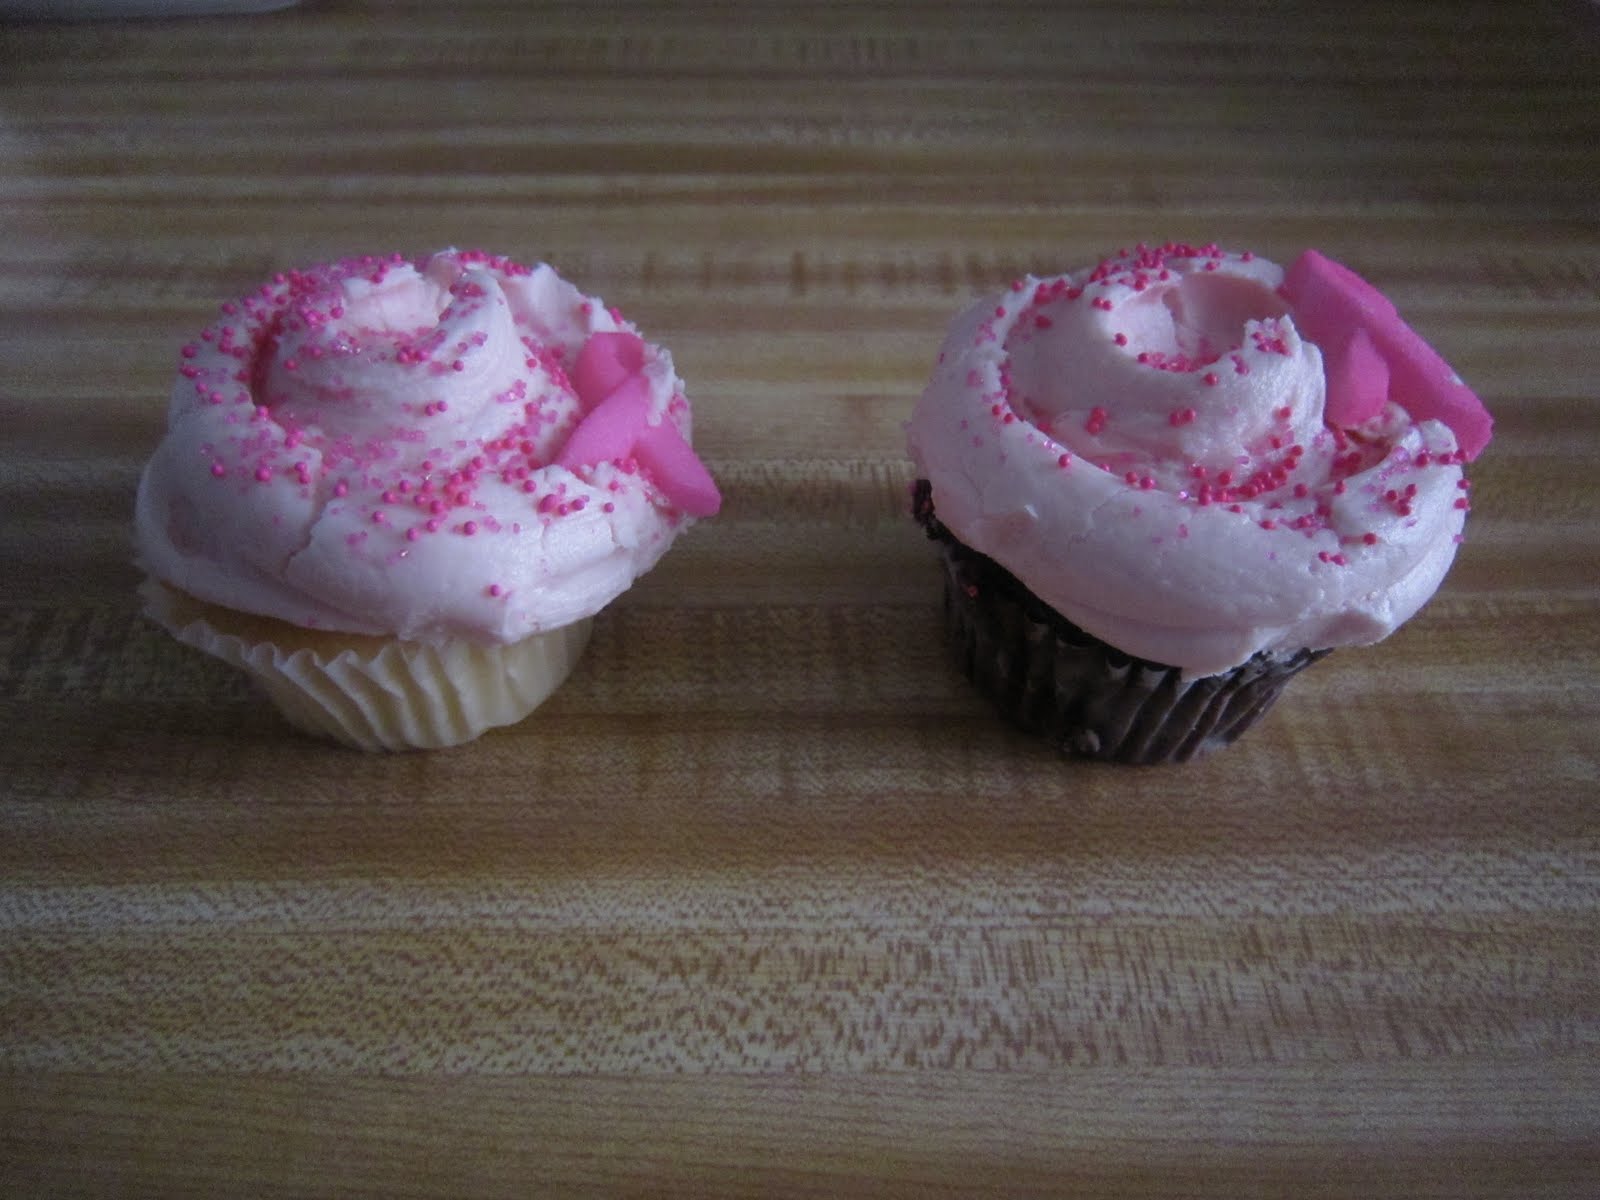 http://1.bp.blogspot.com/_BH4AkUxj8GY/TLHMbe4cm1I/AAAAAAAALbQ/tr7W3ROCmWk/s1600/Magnolia-Bakery-Pink-Ribbon-Cupcake-Vanilla-Chocolate.JPG